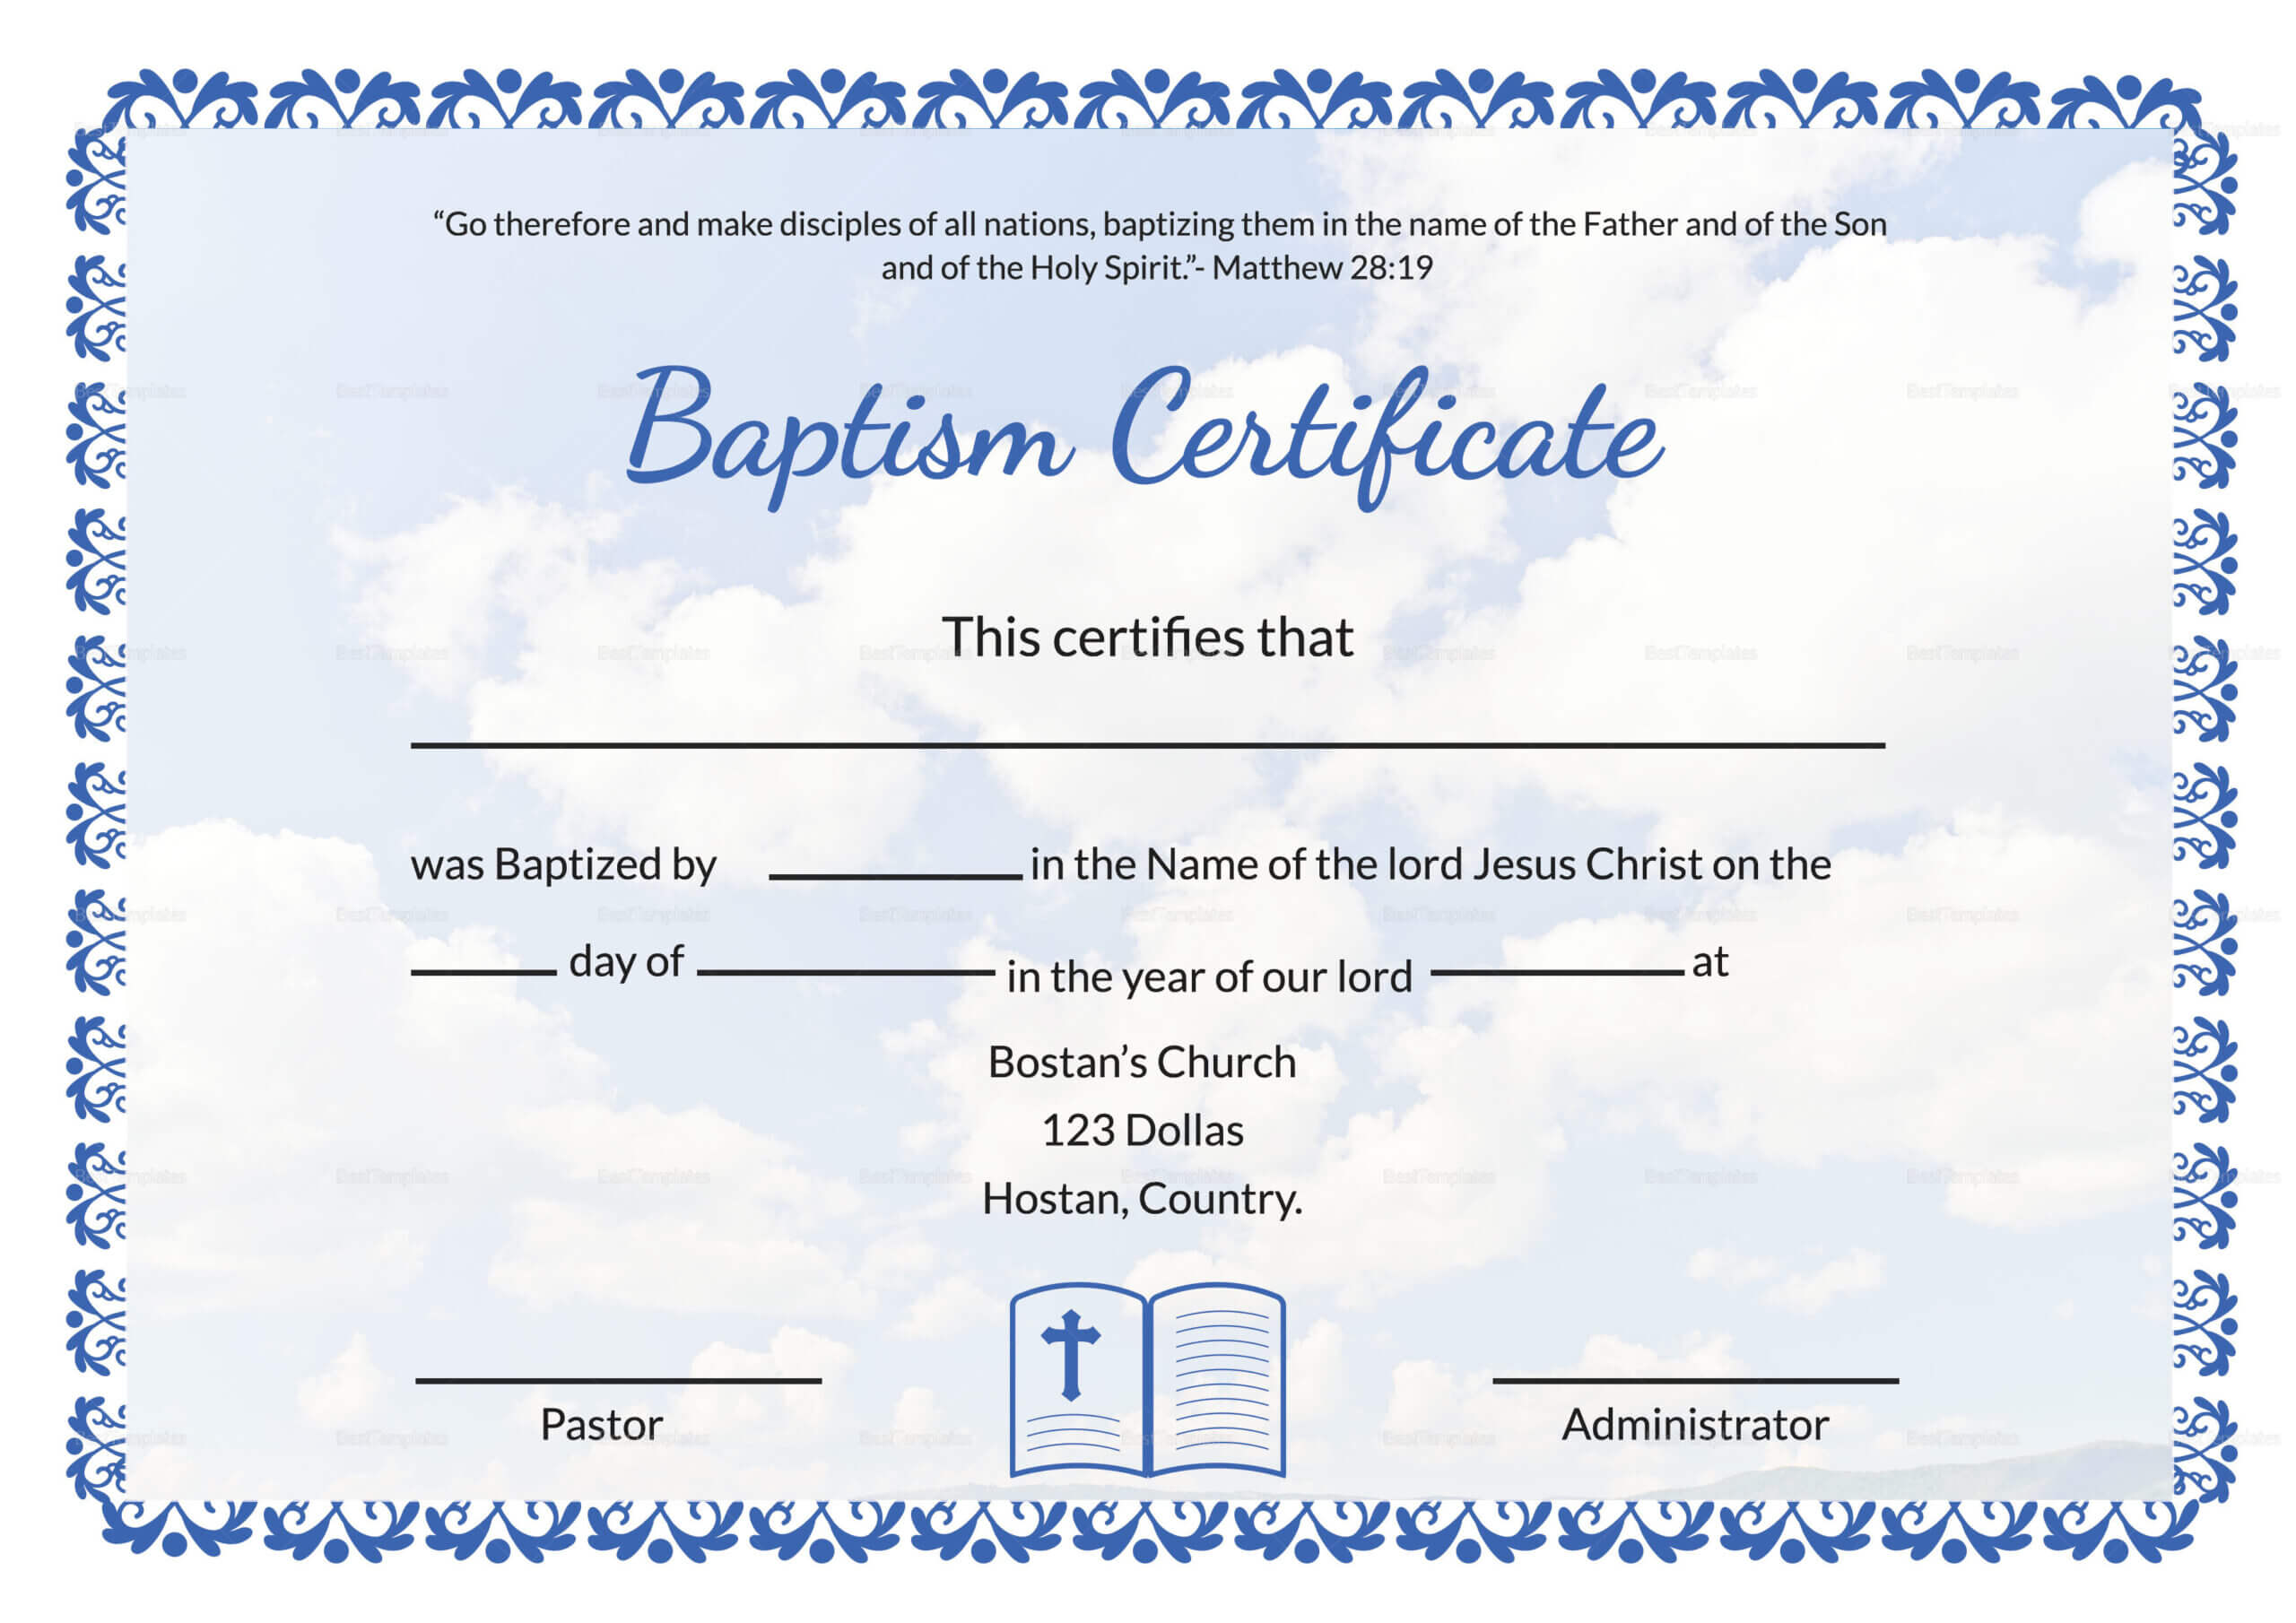 007 Certificate Of Baptism Template Ideas Unique Broadman Throughout Roman Catholic Baptism Certificate Template